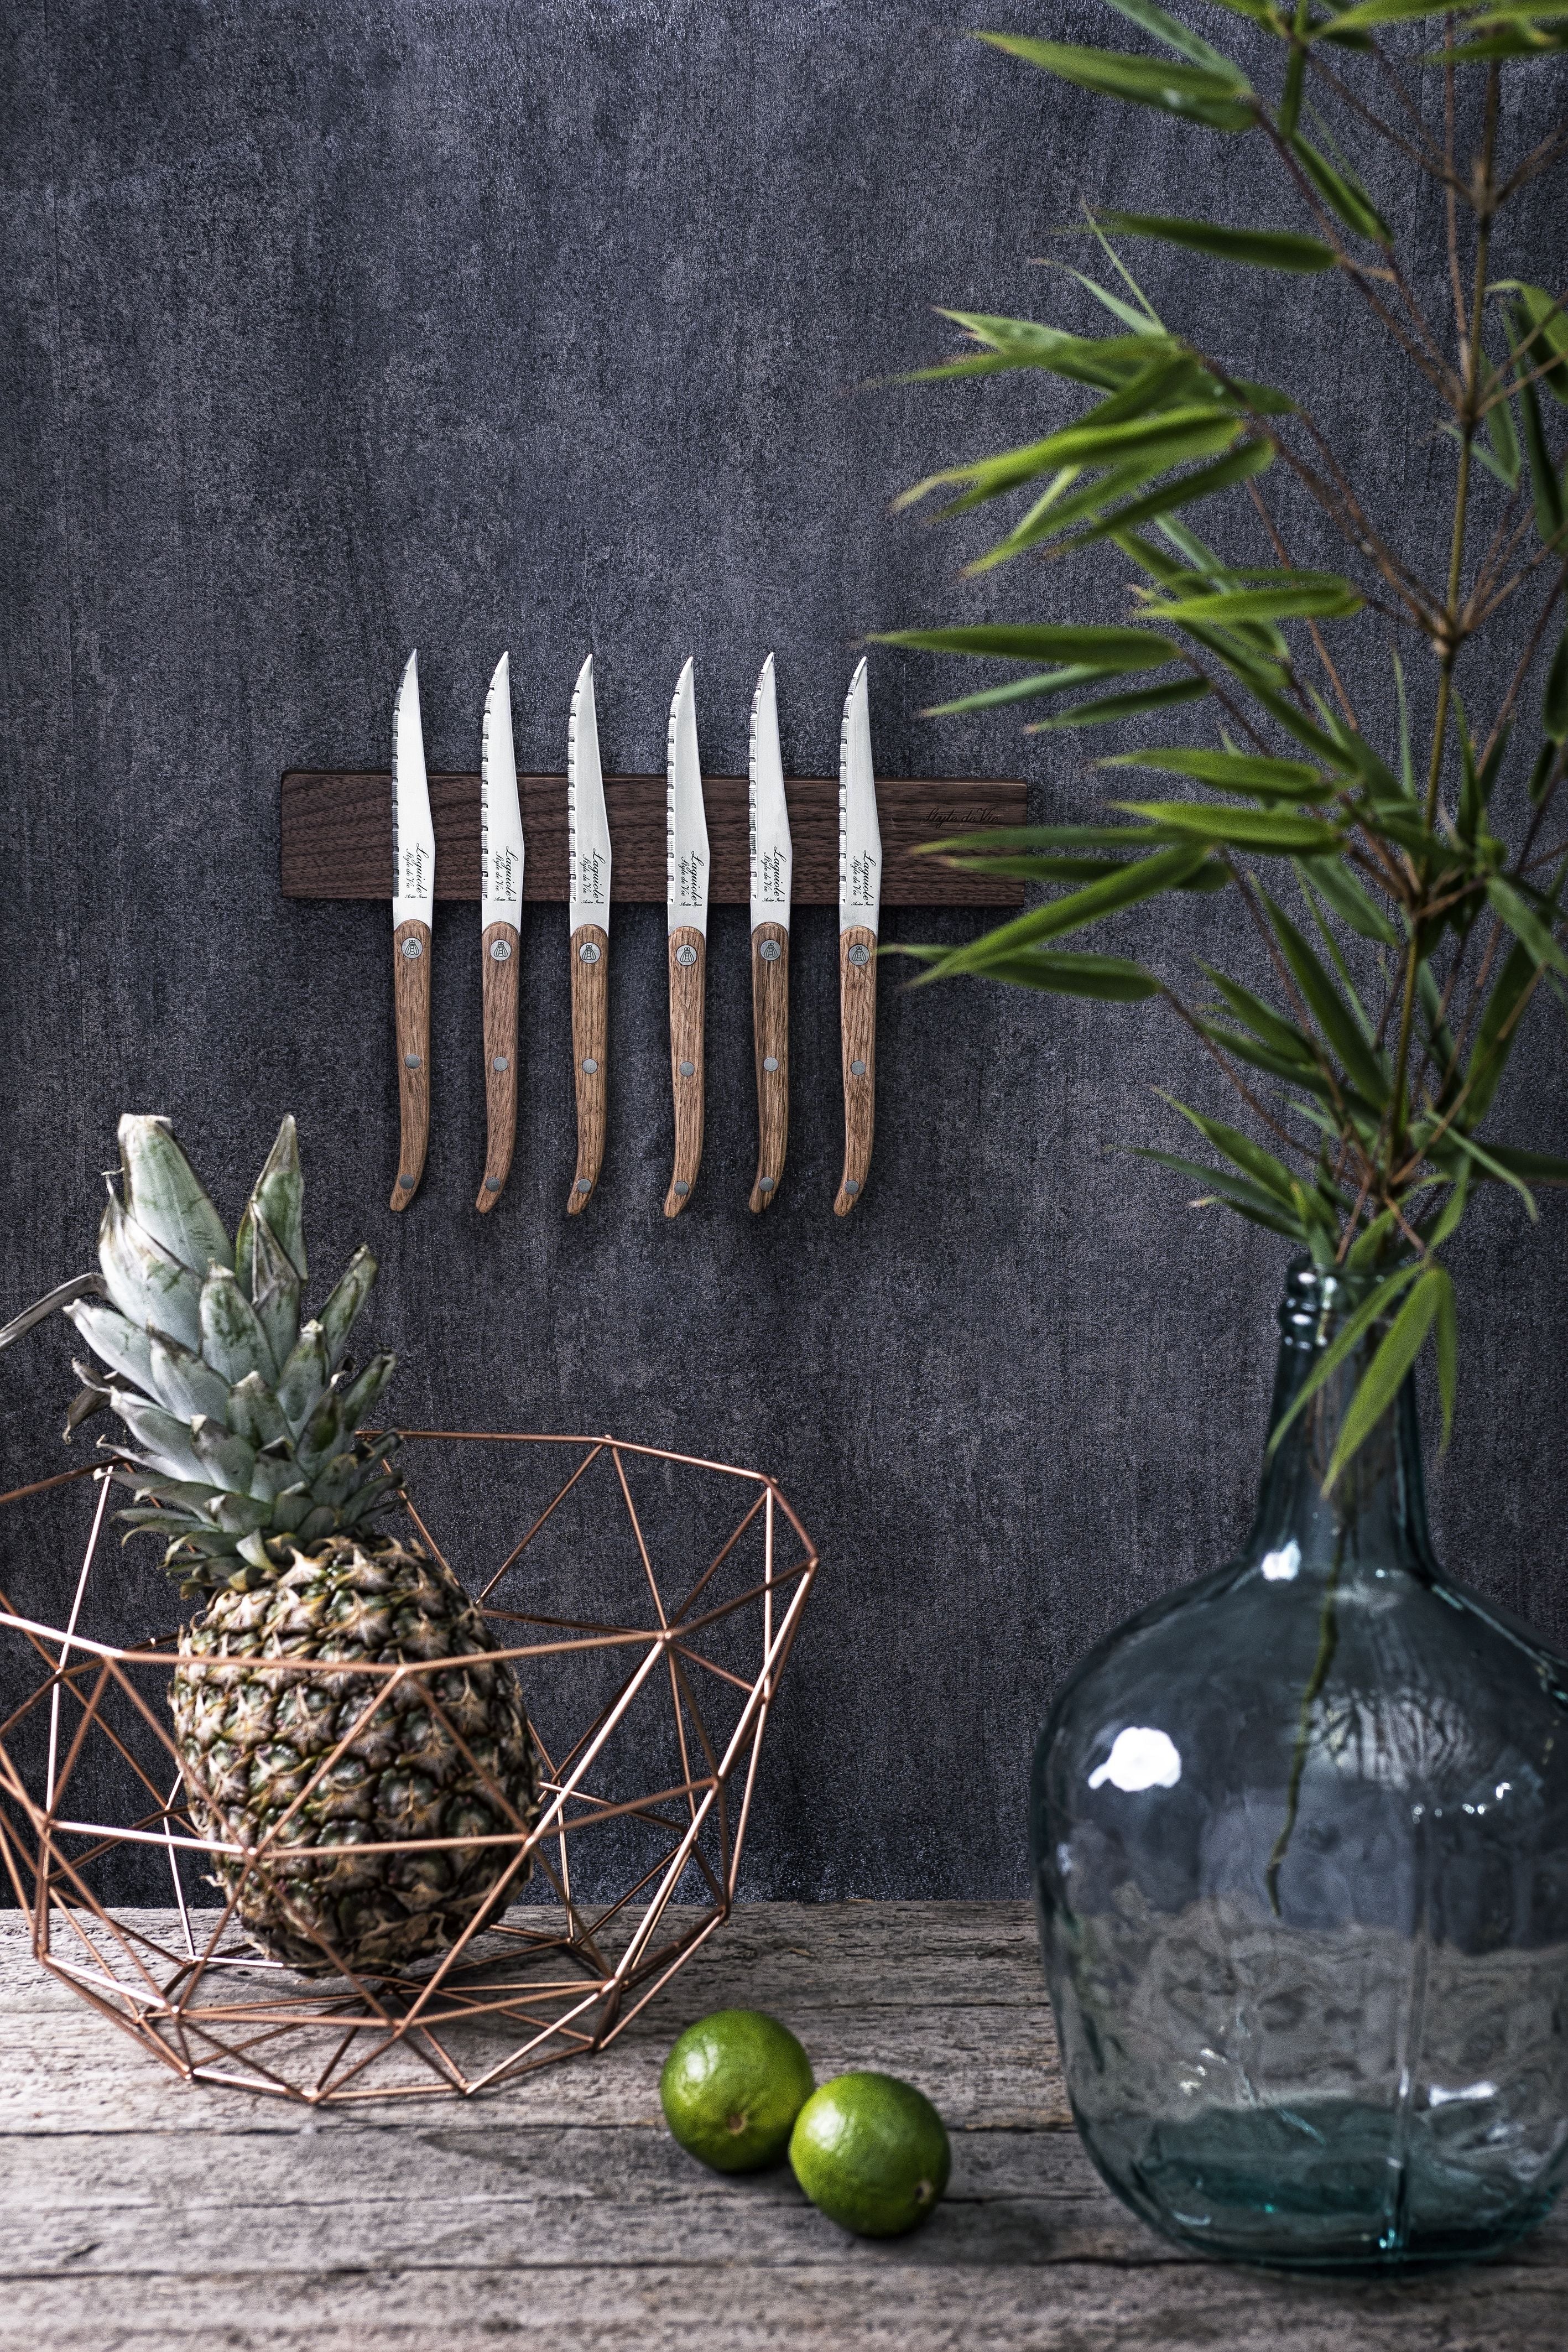 Estilo de Vie Authentique Laguiole Innovation Line Kneak Knives de 6 piezas de madera de roble, cuchilla serrada